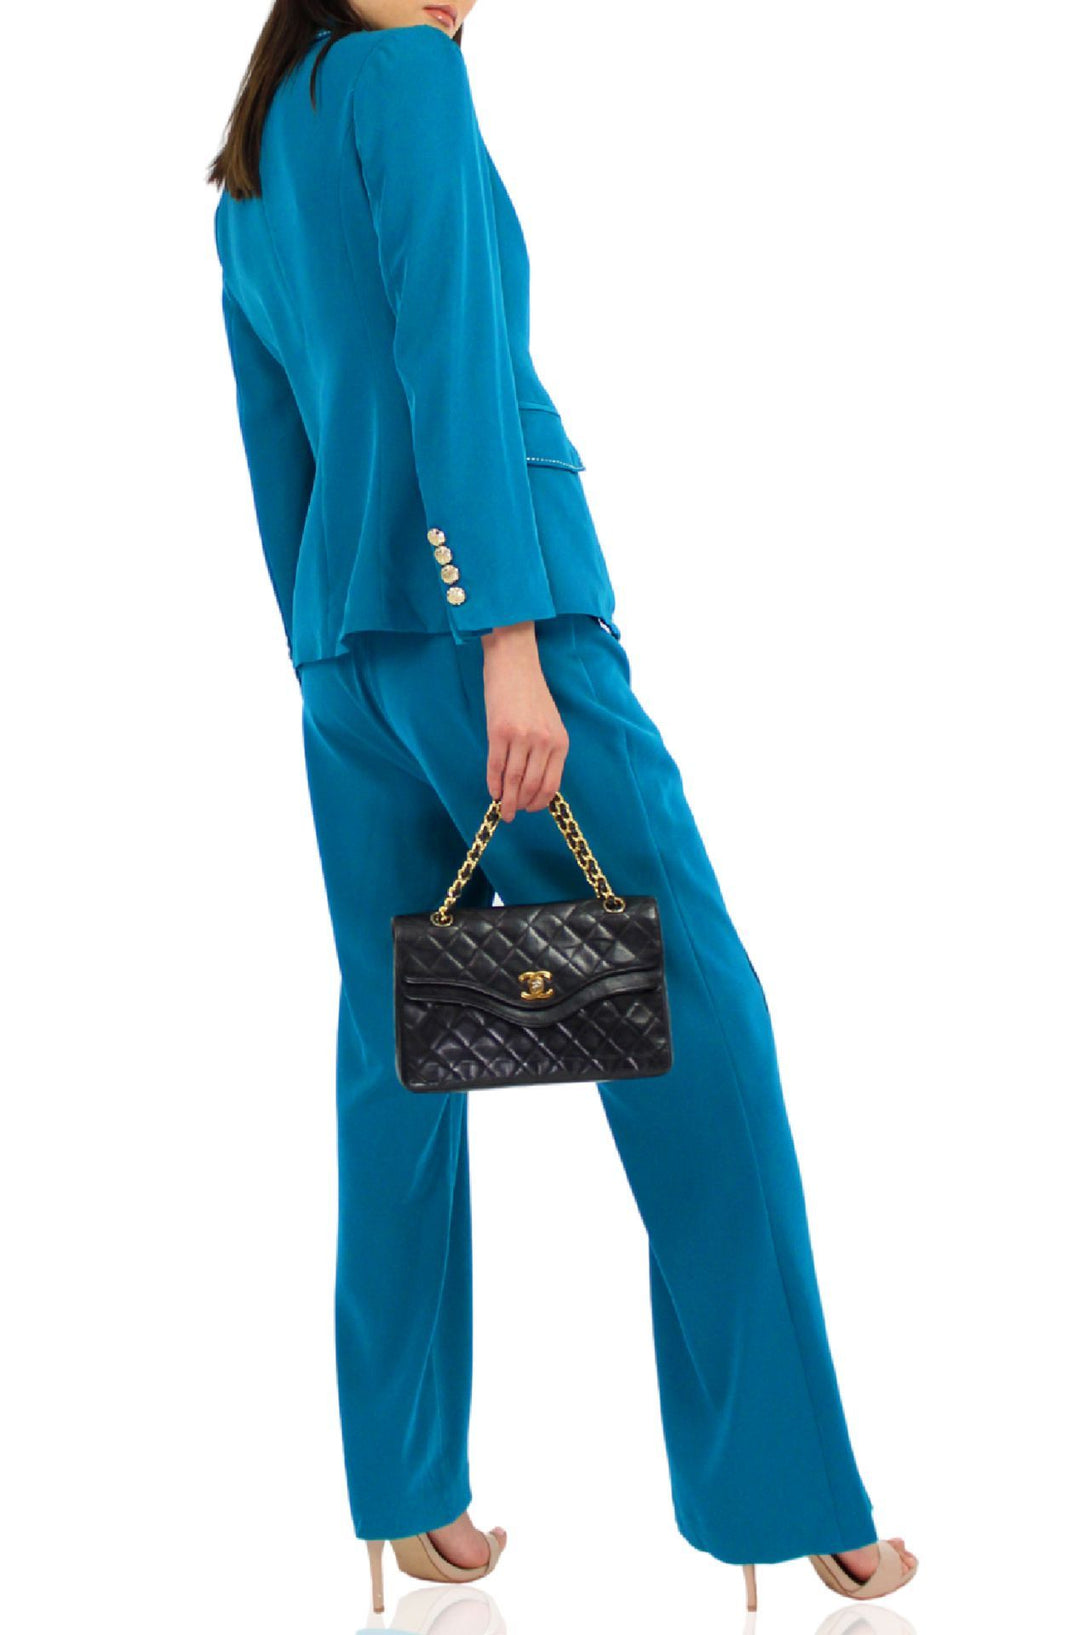 Women-Designer-Blue-Matching-Suit-Set-By-Kyle-Richards.